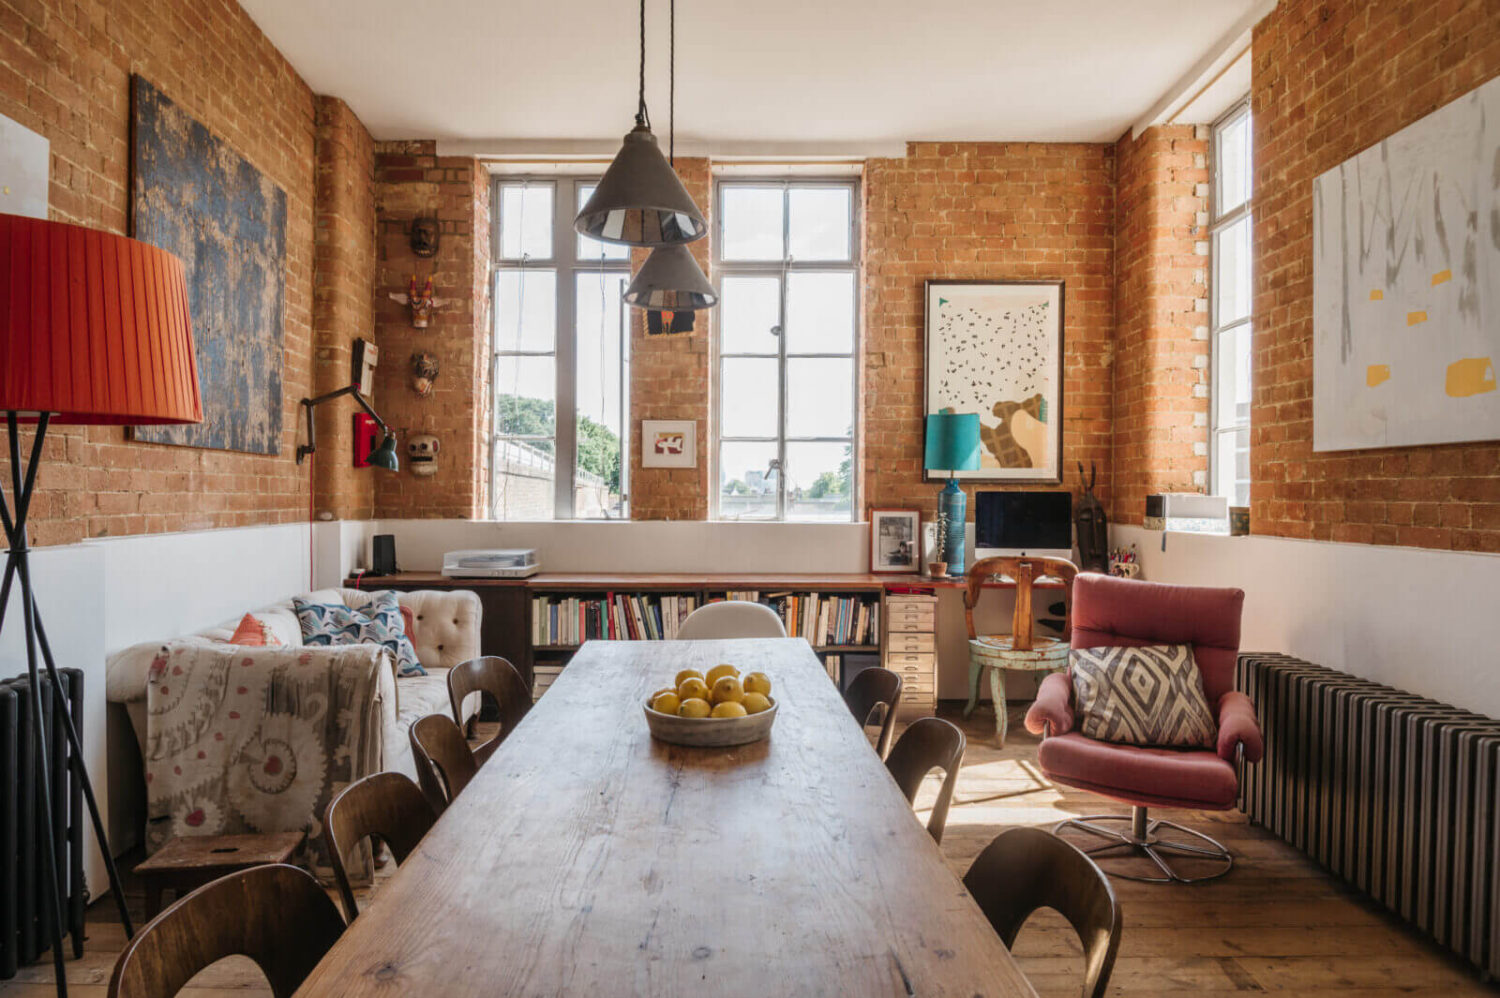 dining-room-brick-walls-wooden-floor-london-flat-nordroom